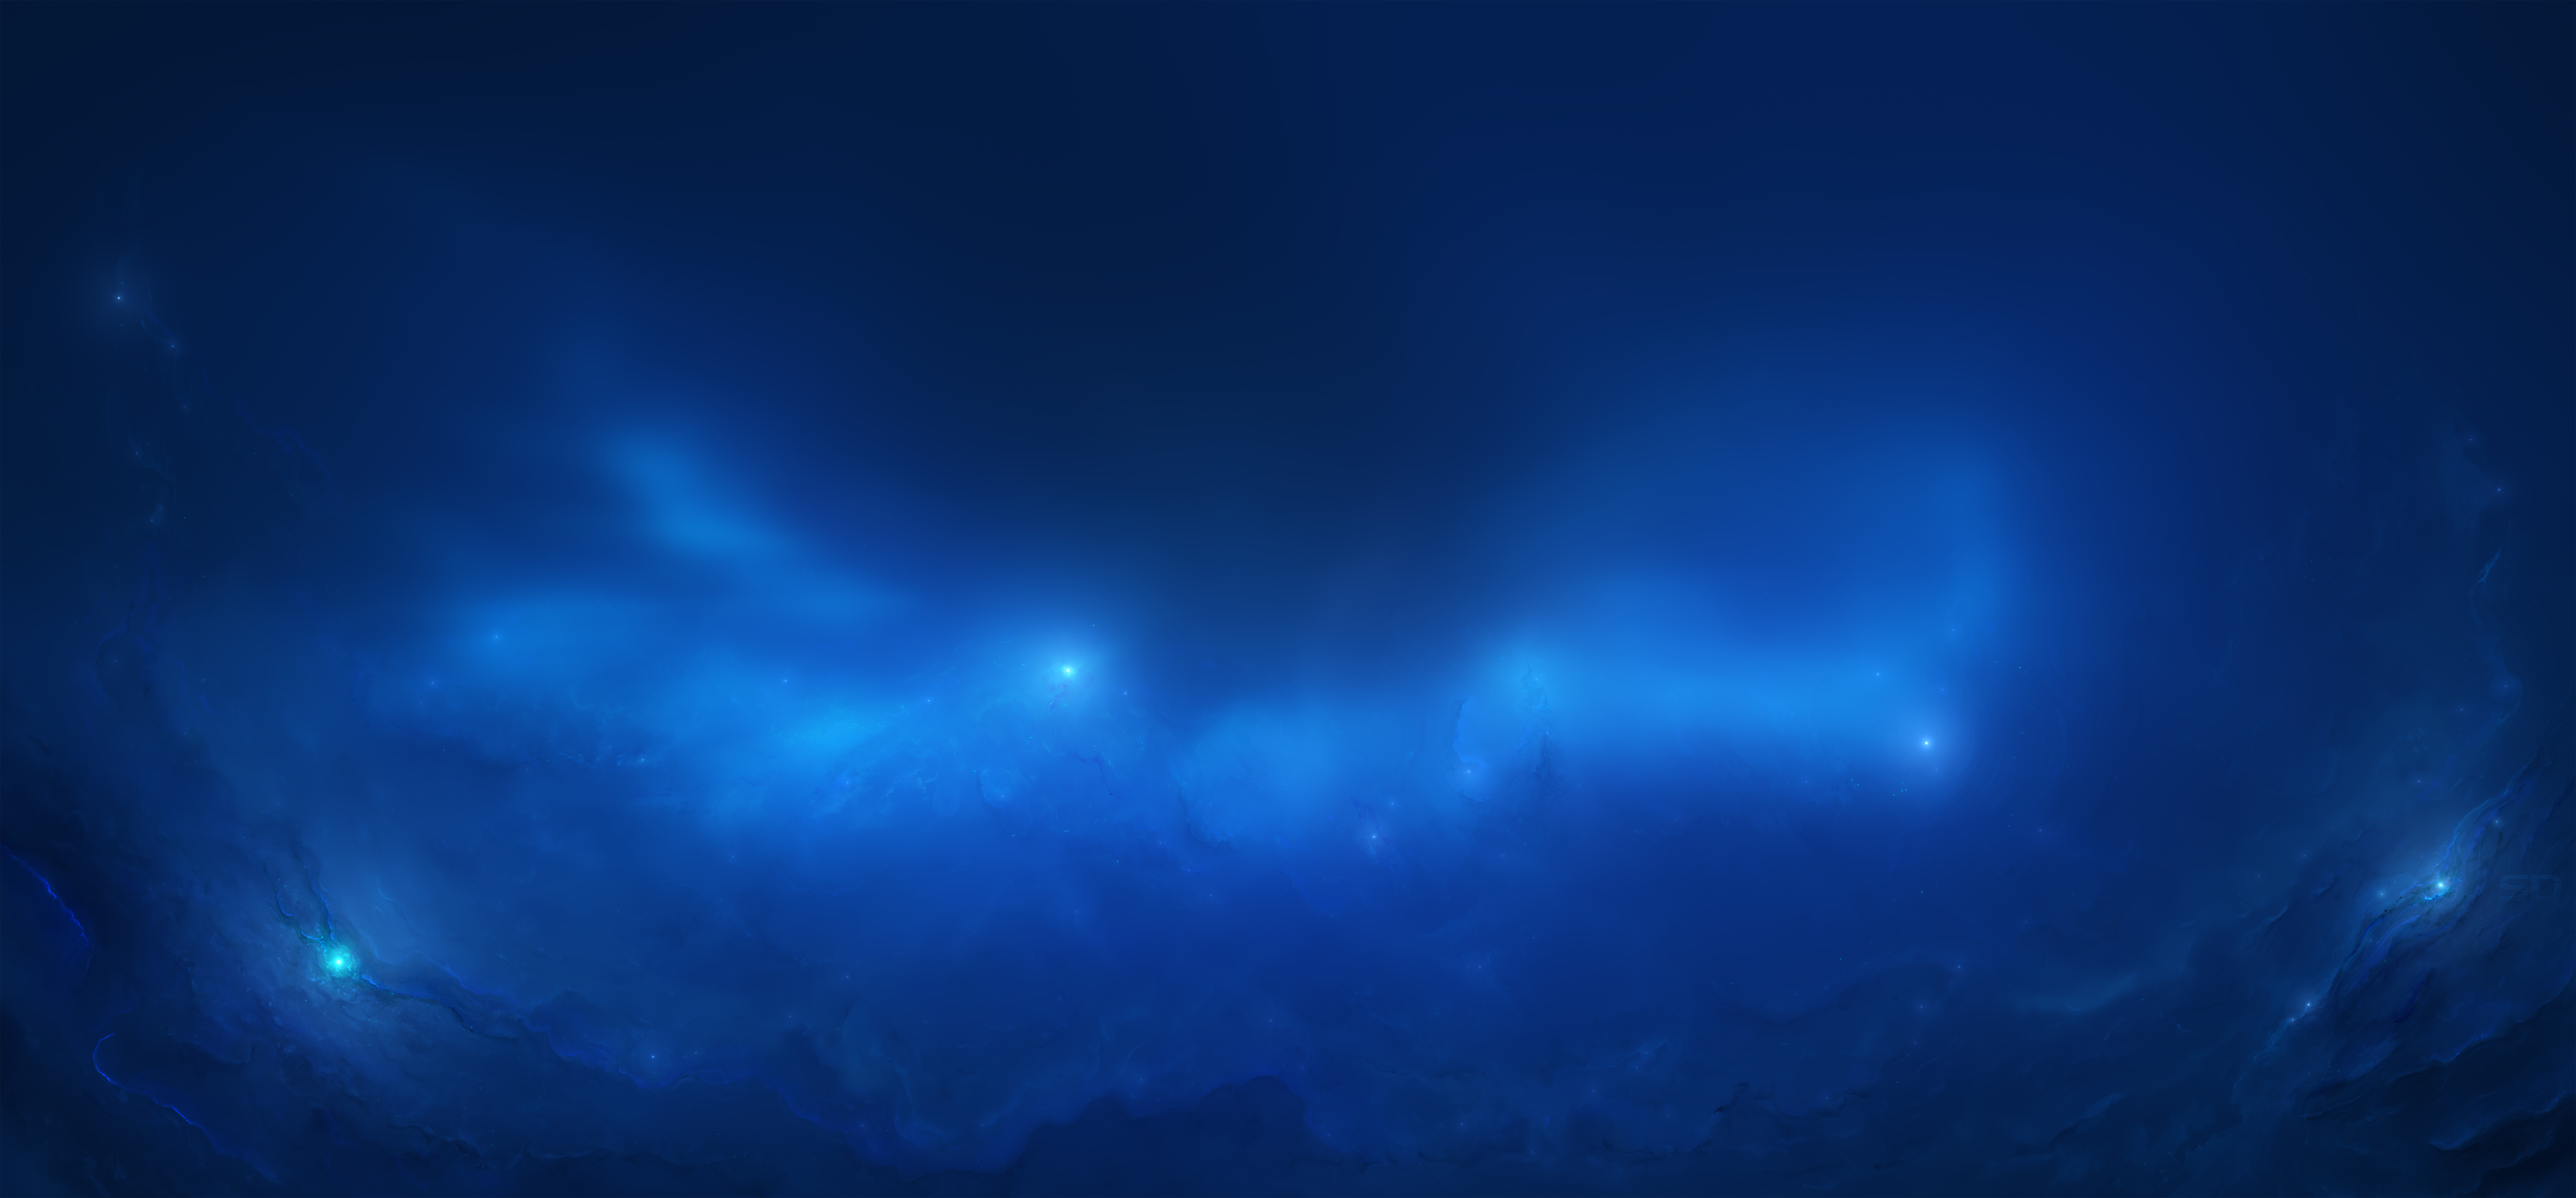 Sea Valley Nebula by Starkiteckt